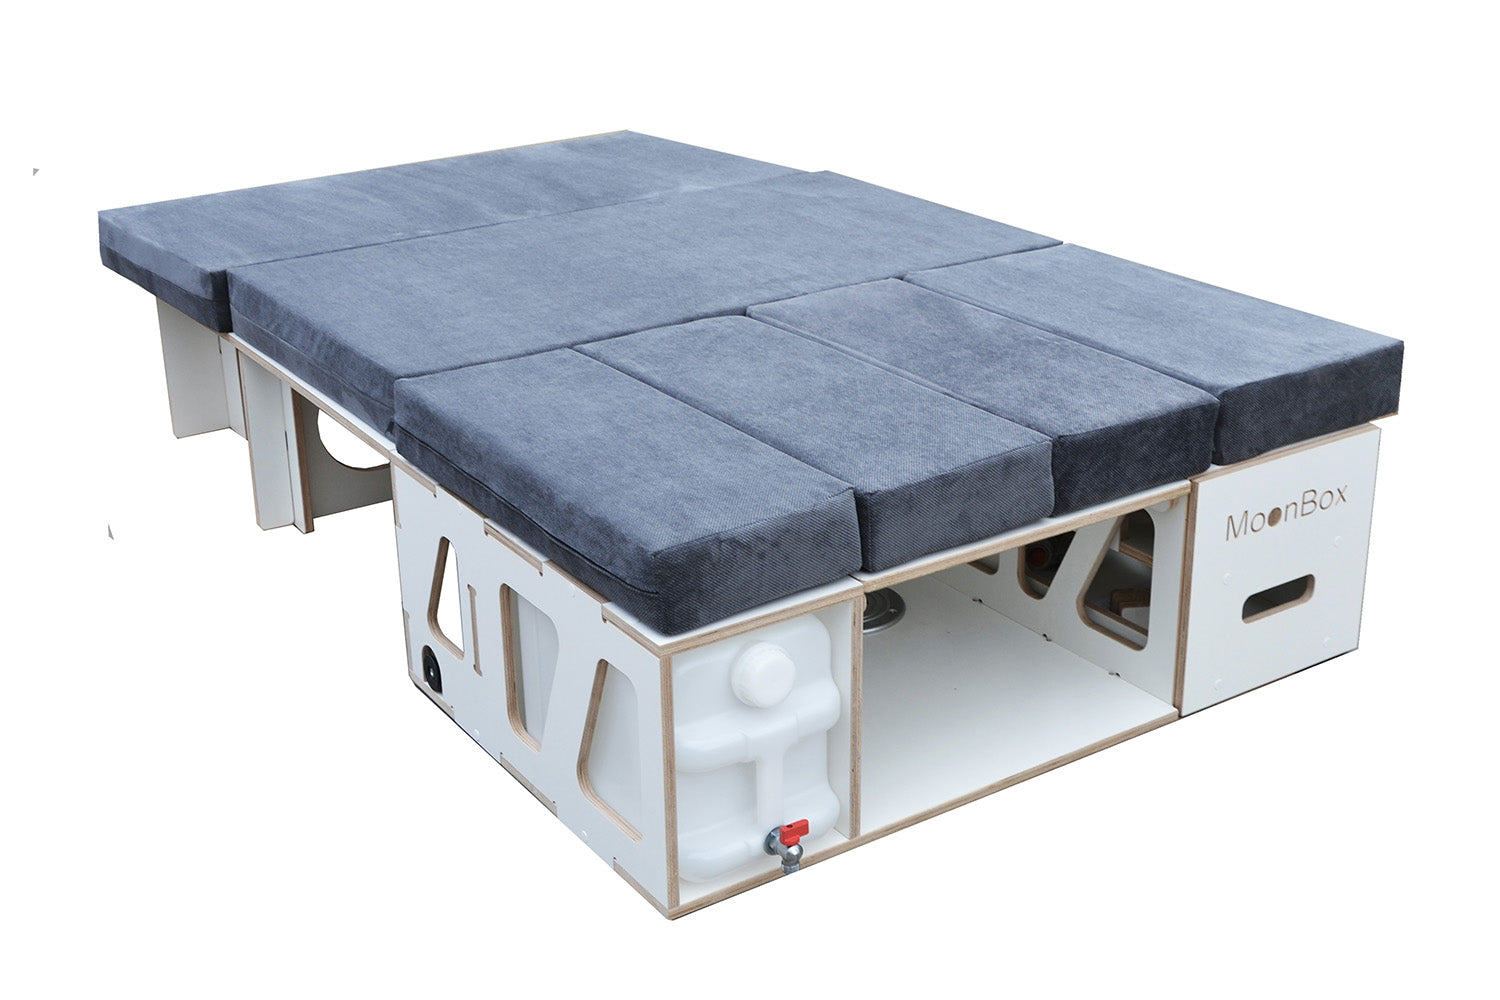 Moonbox Campingbox Minivan 115cm Modify